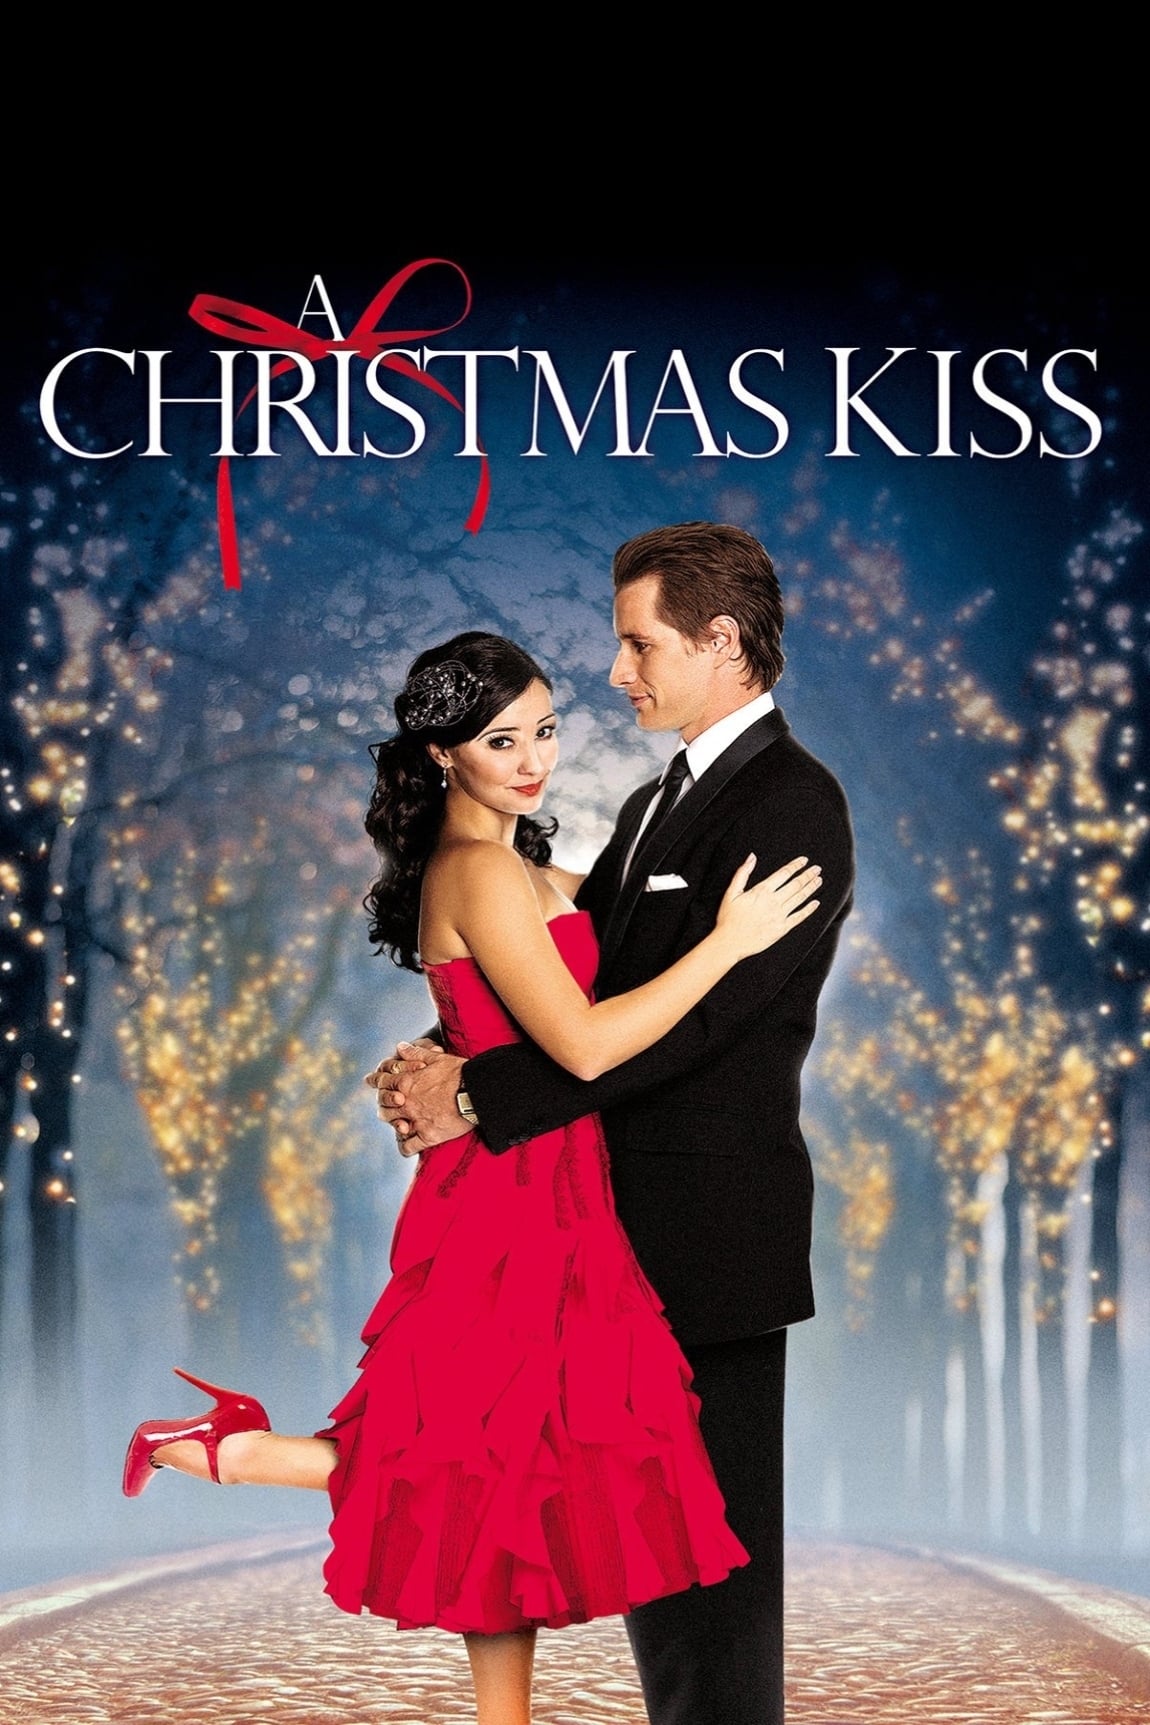 Caratula de A CHRISTMAS KISS 2 (Un beso de Navidad) 